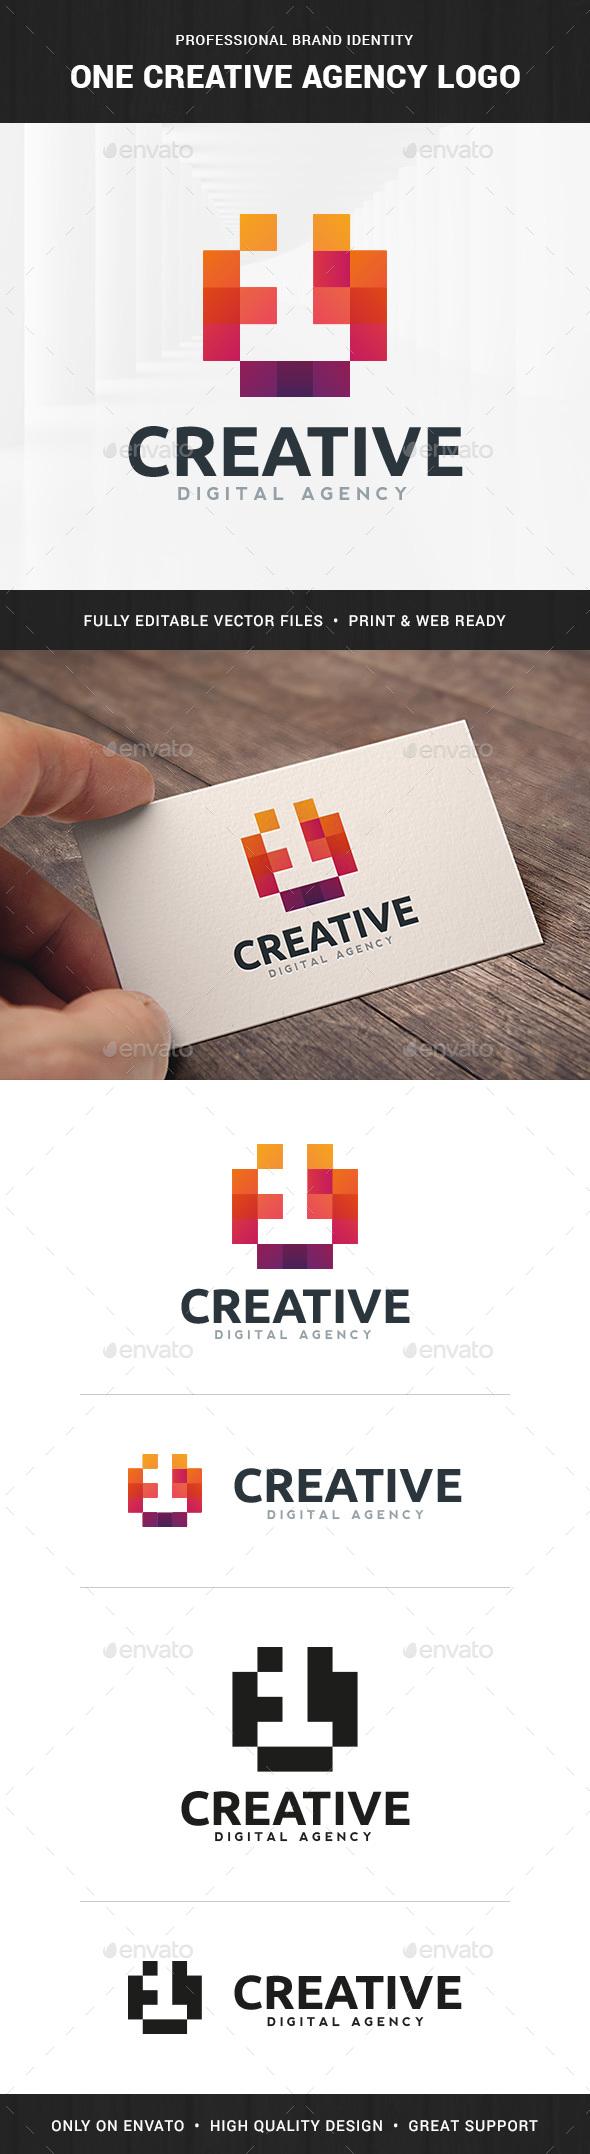 One Creative Agency Logo